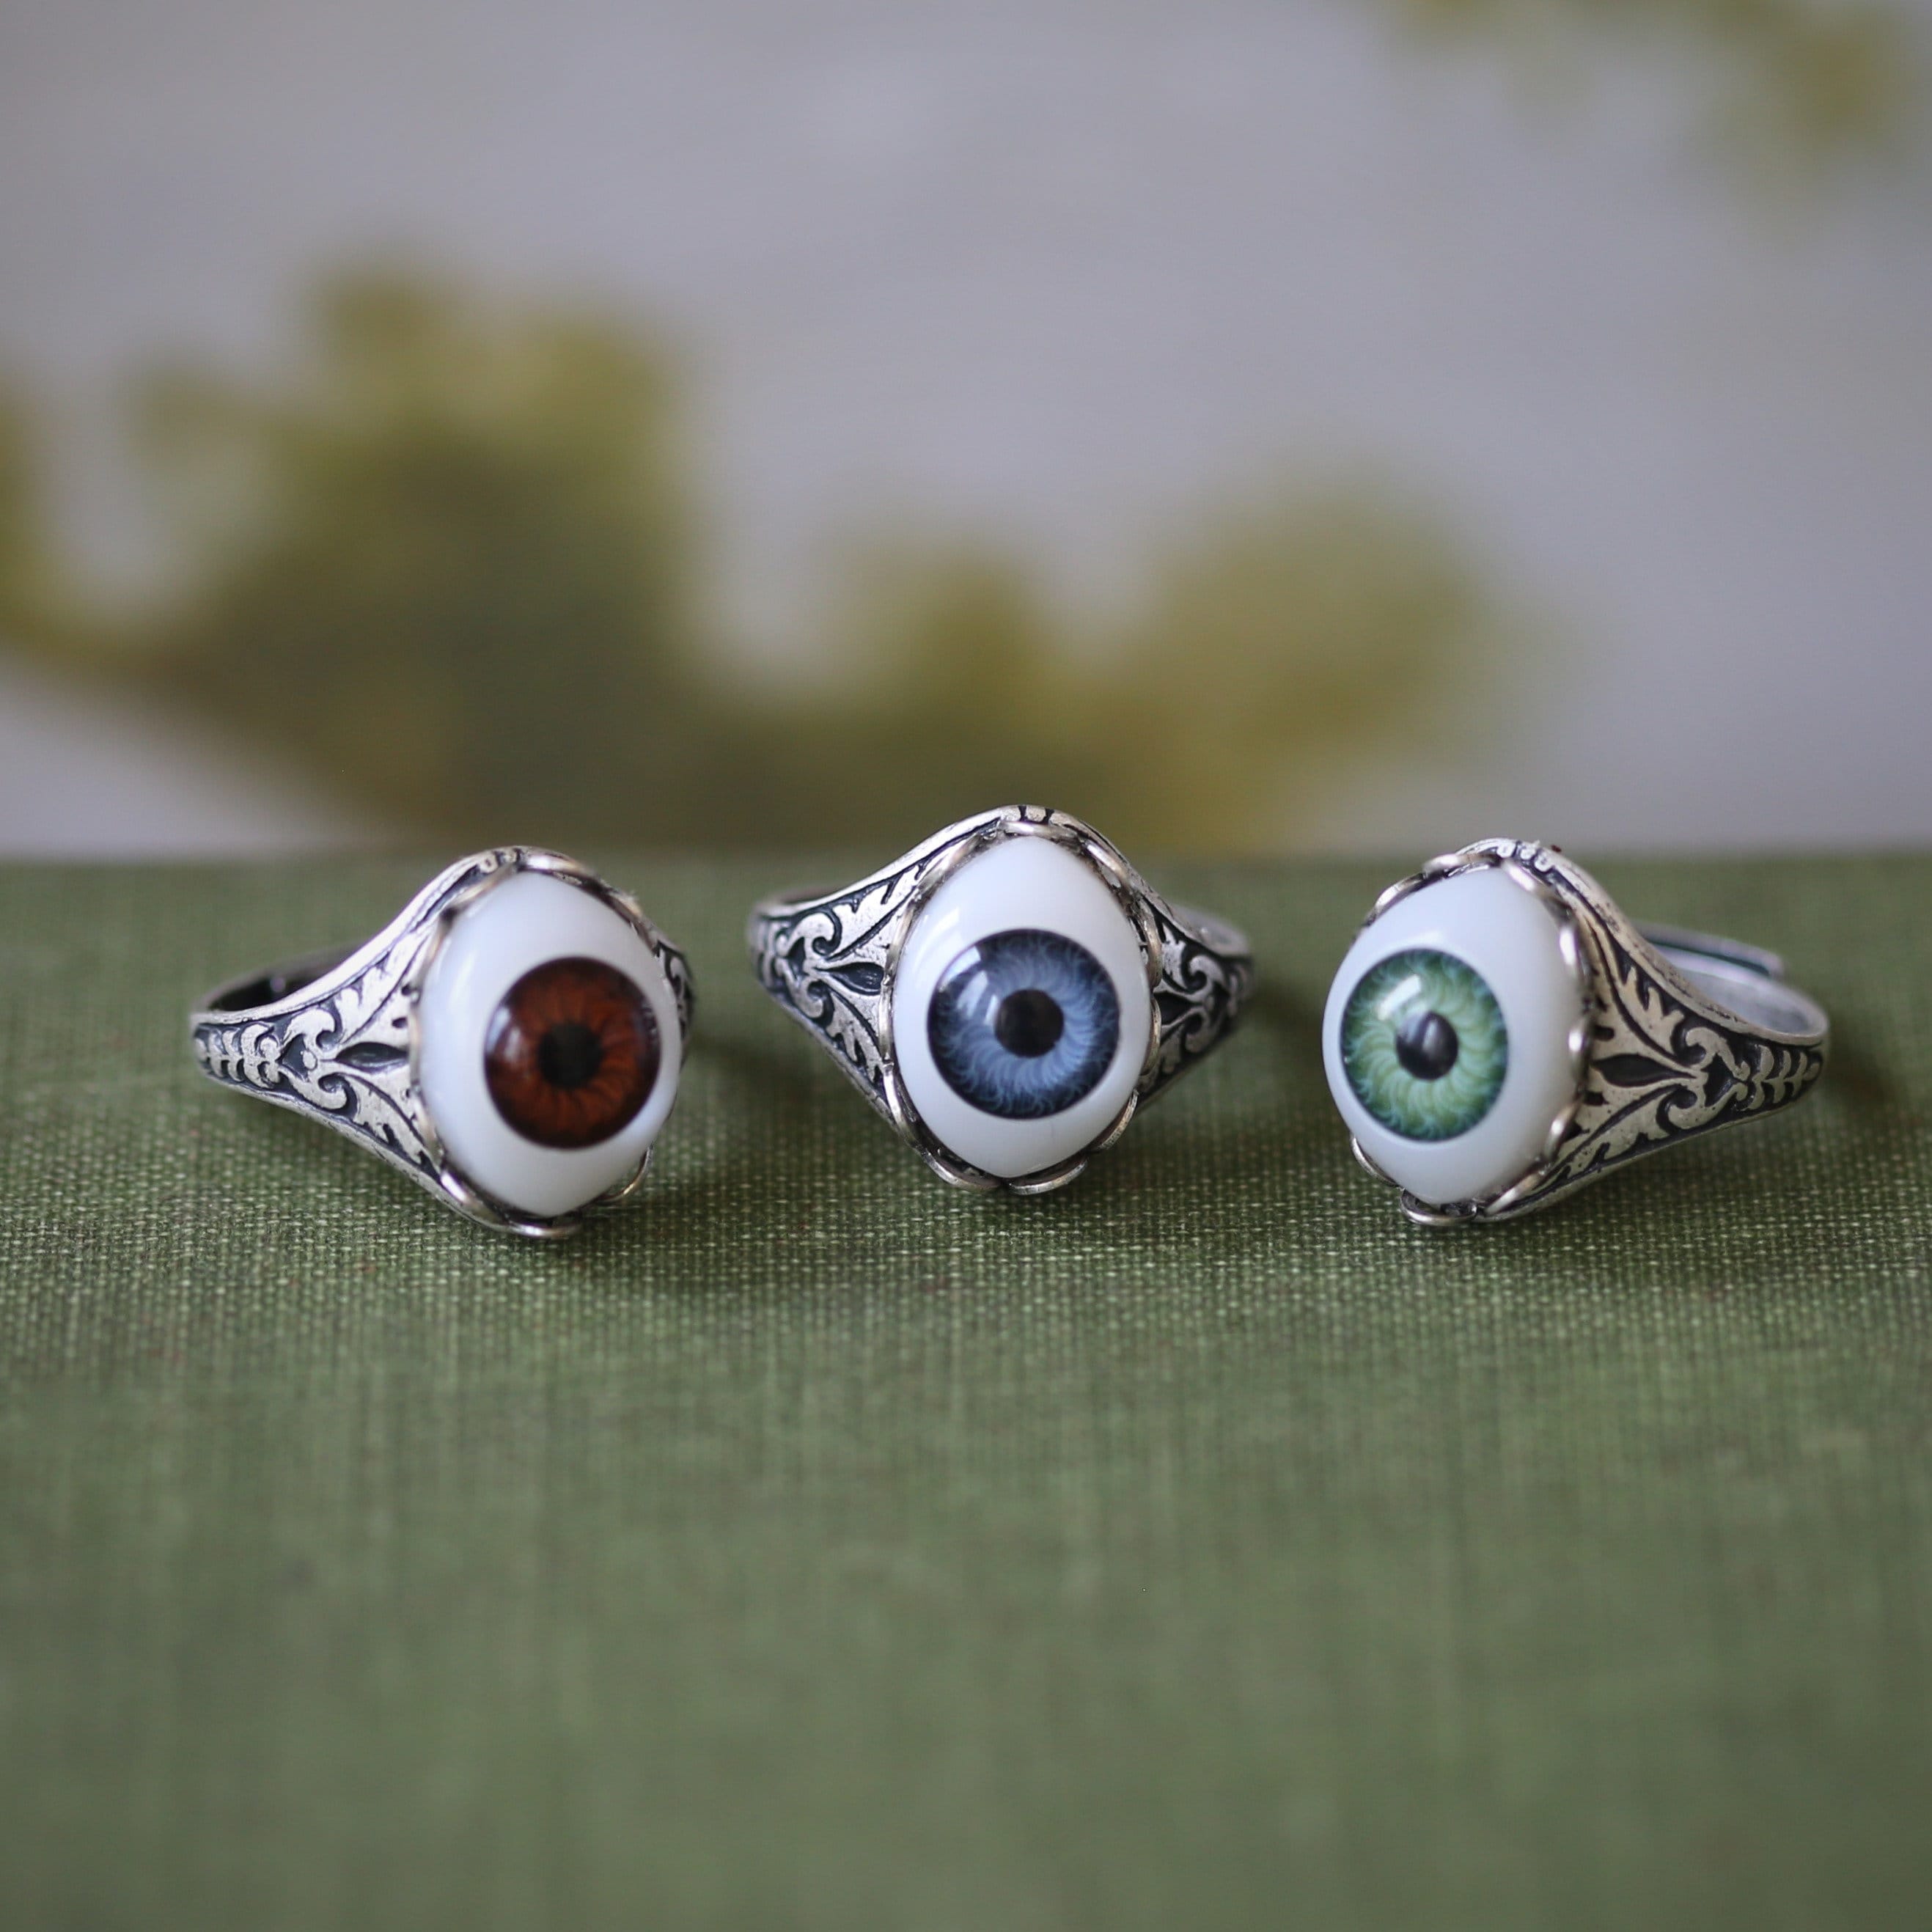 Blue Eye Ring in Antiqued Silver or Brass Vintage Style Adjustable